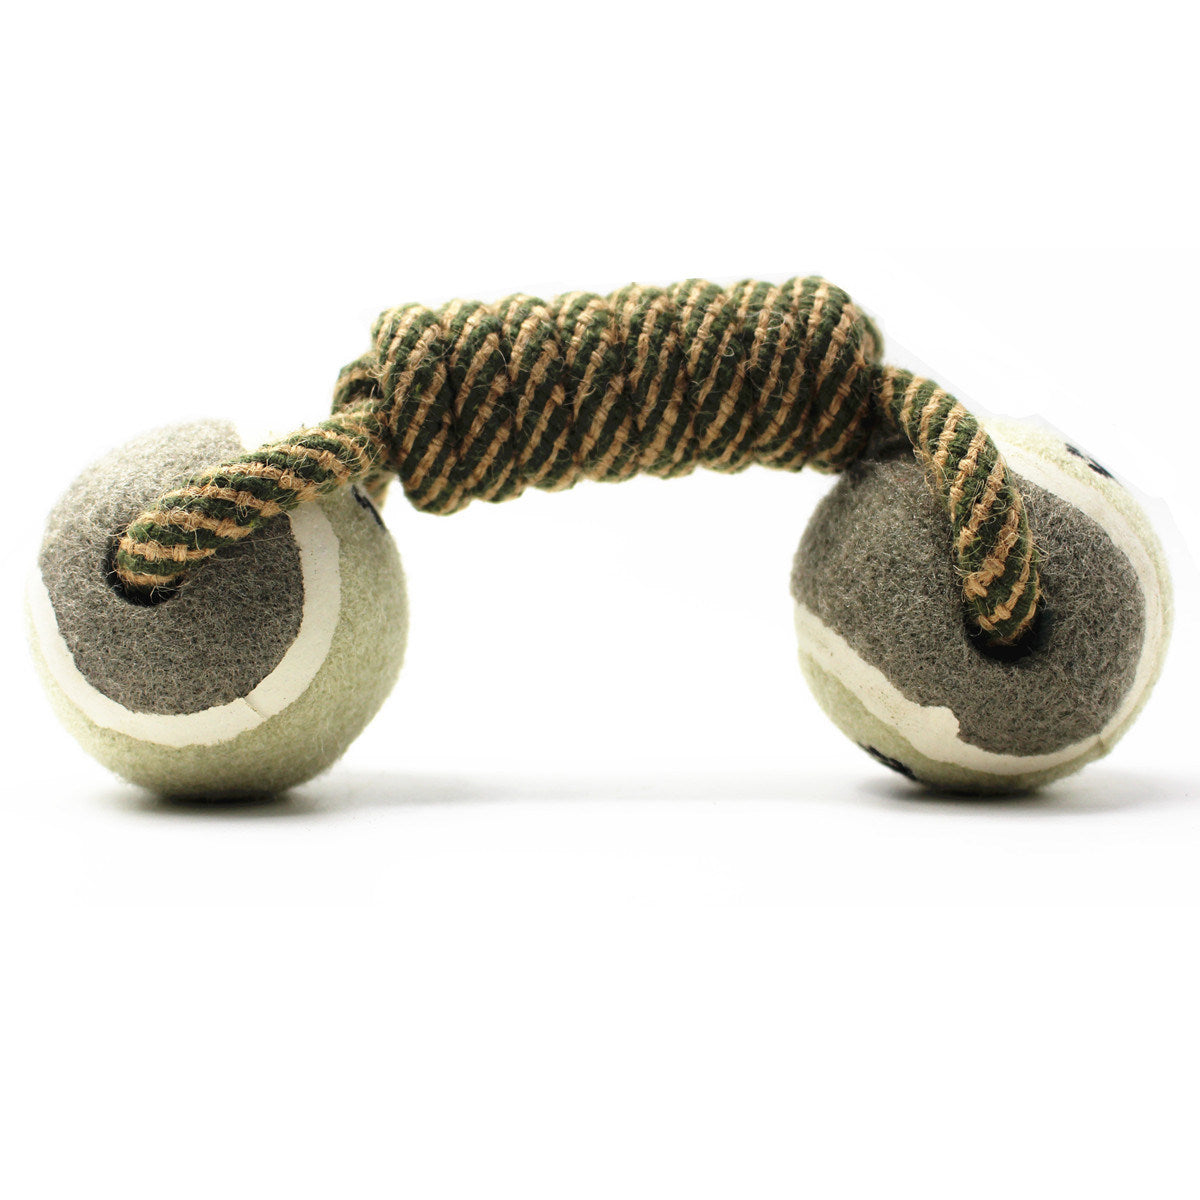 PawsPlay Cotton Rope Toy Set